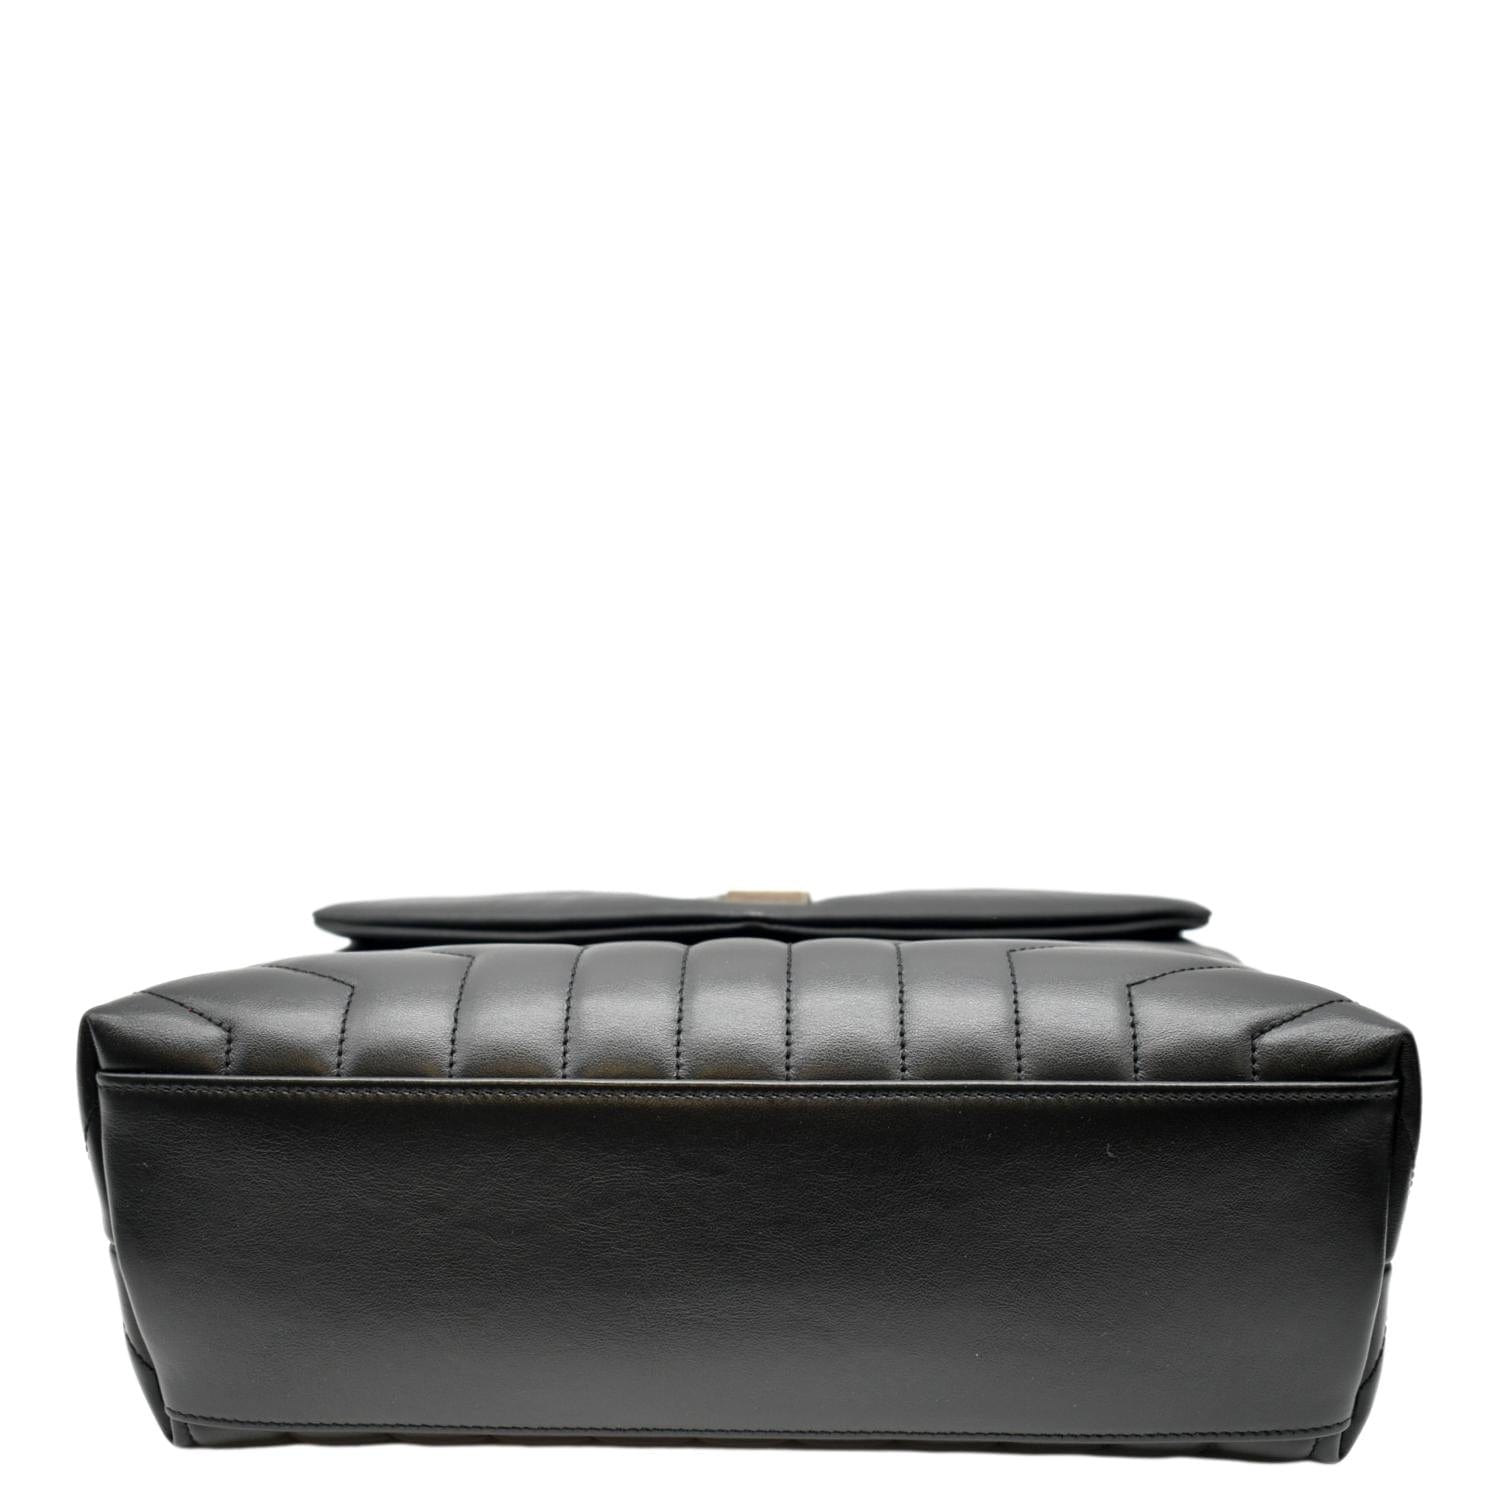 Yves Saint Laurent Chevron Leather Medium Loulou Flap Messenger Bag Black